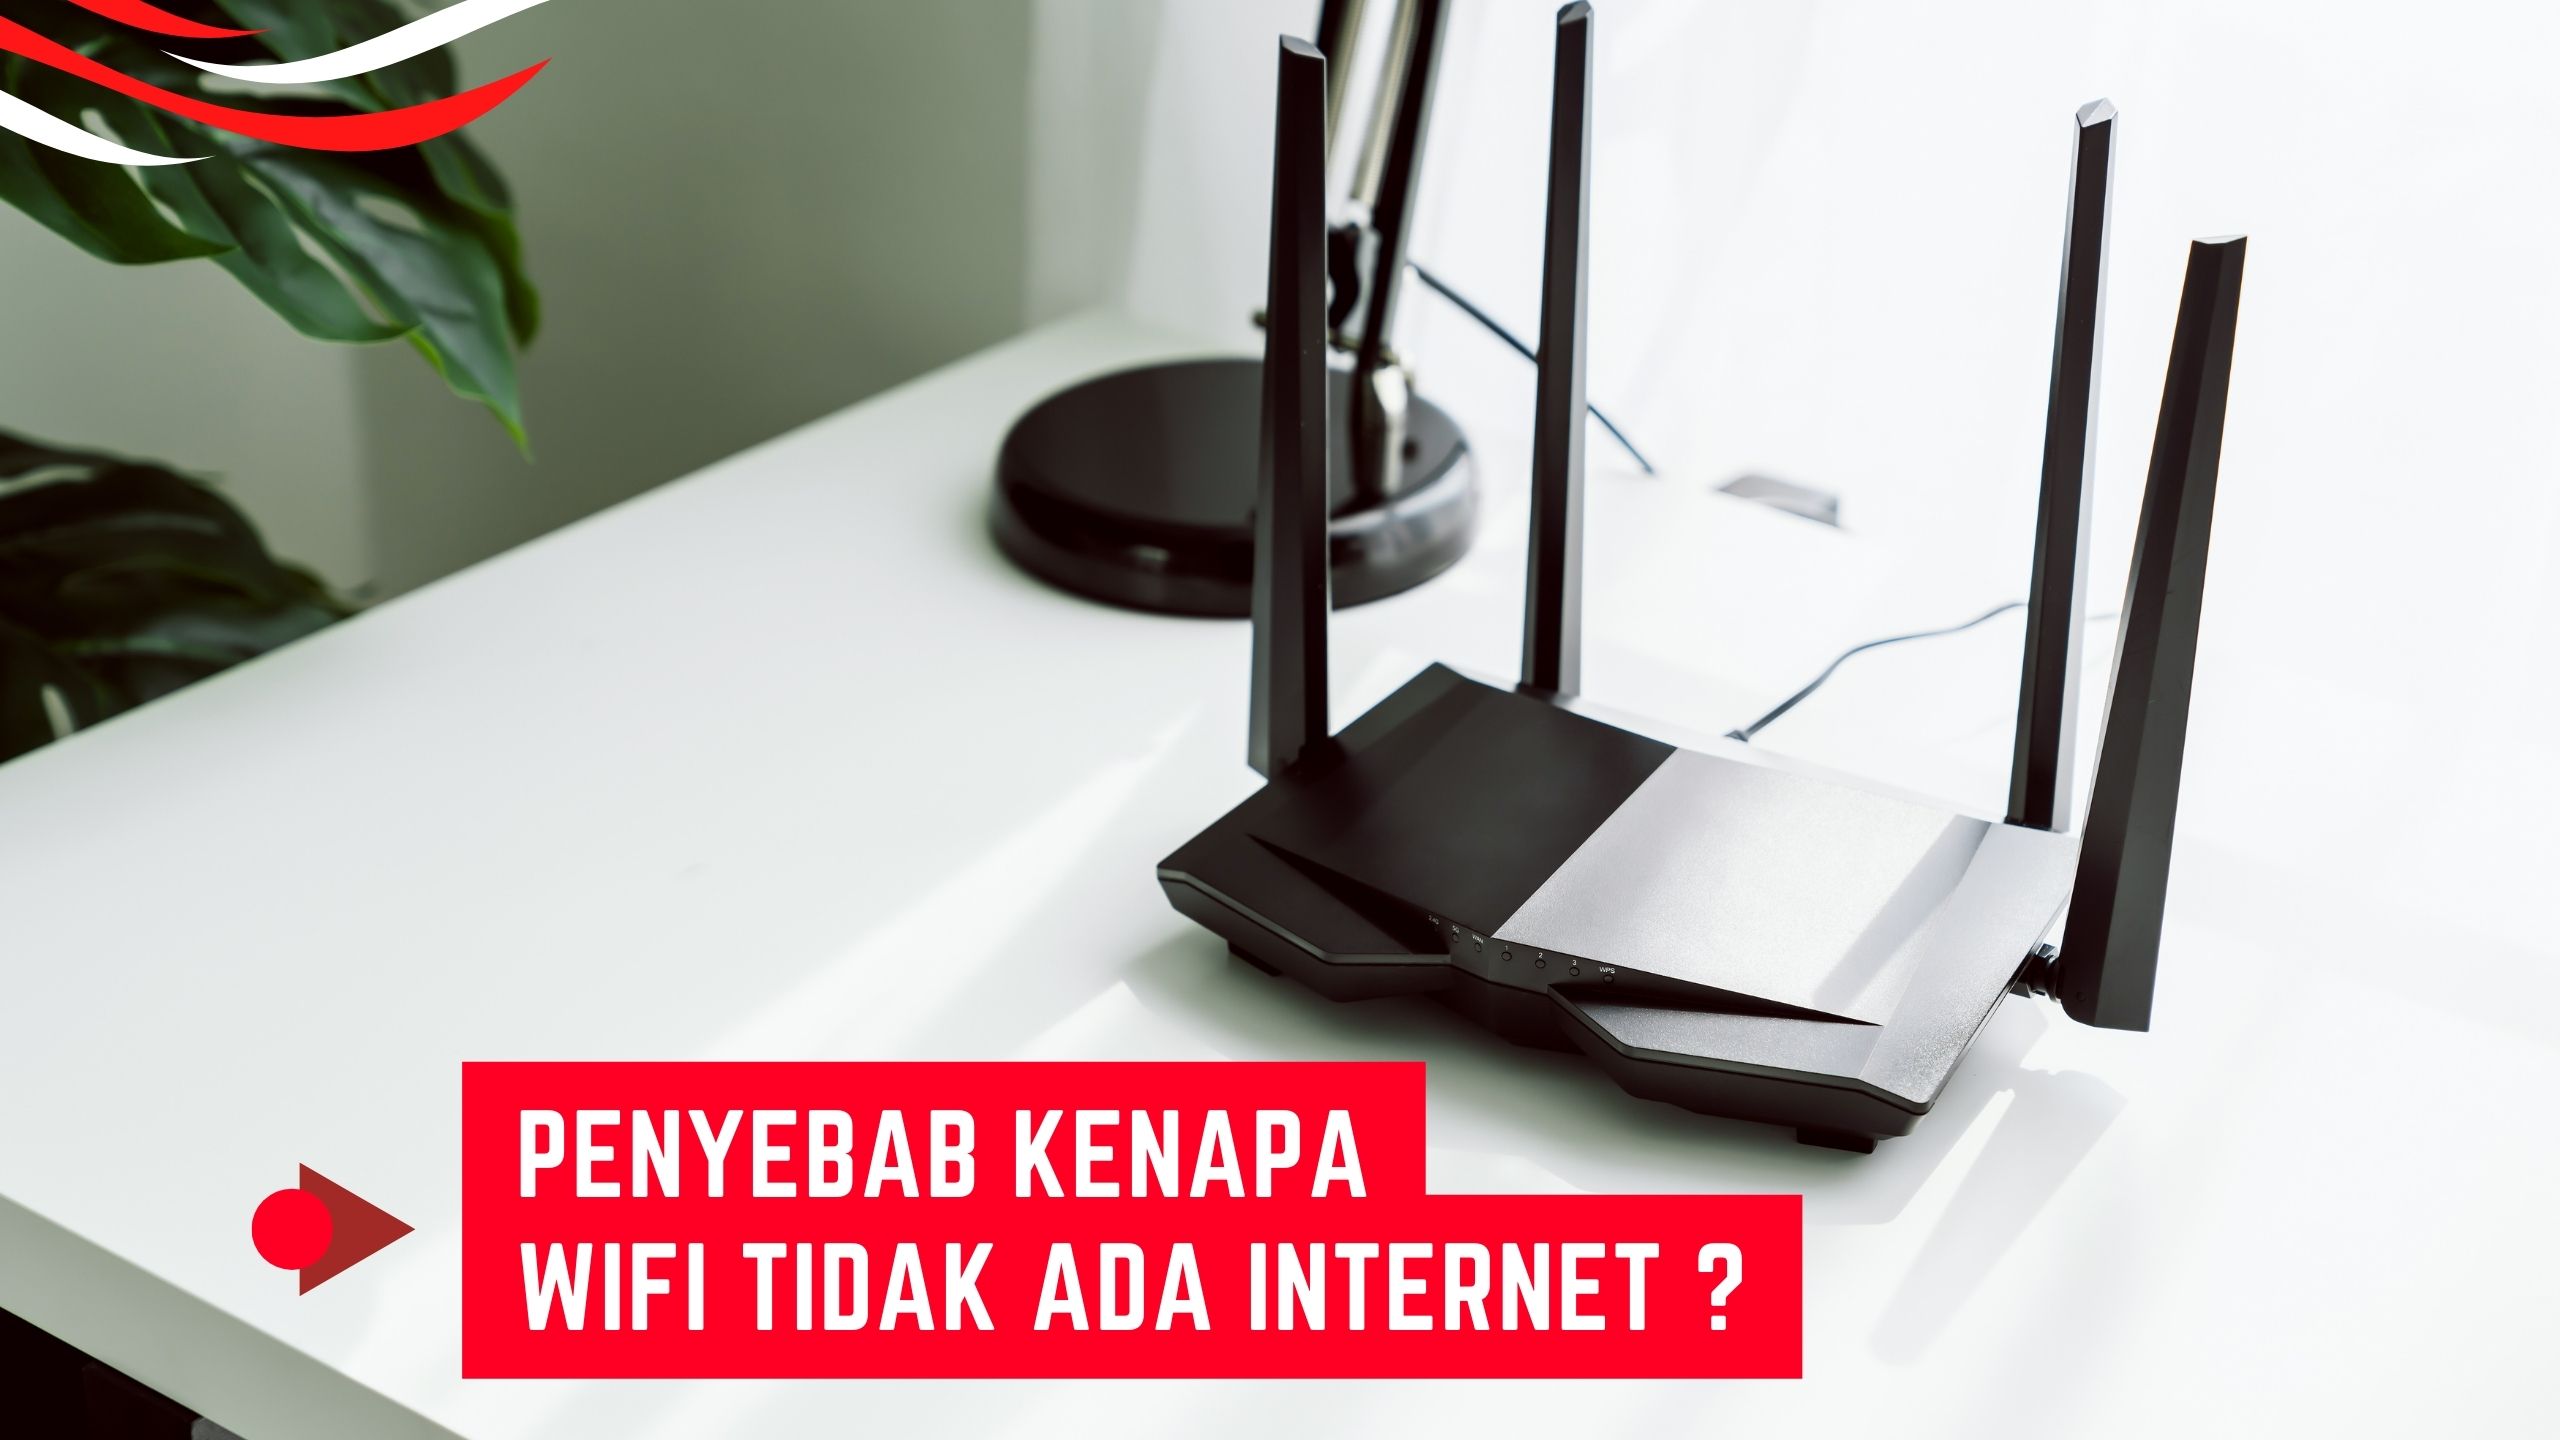 Penyebab Kenapa WiFi Tidak ada Internet